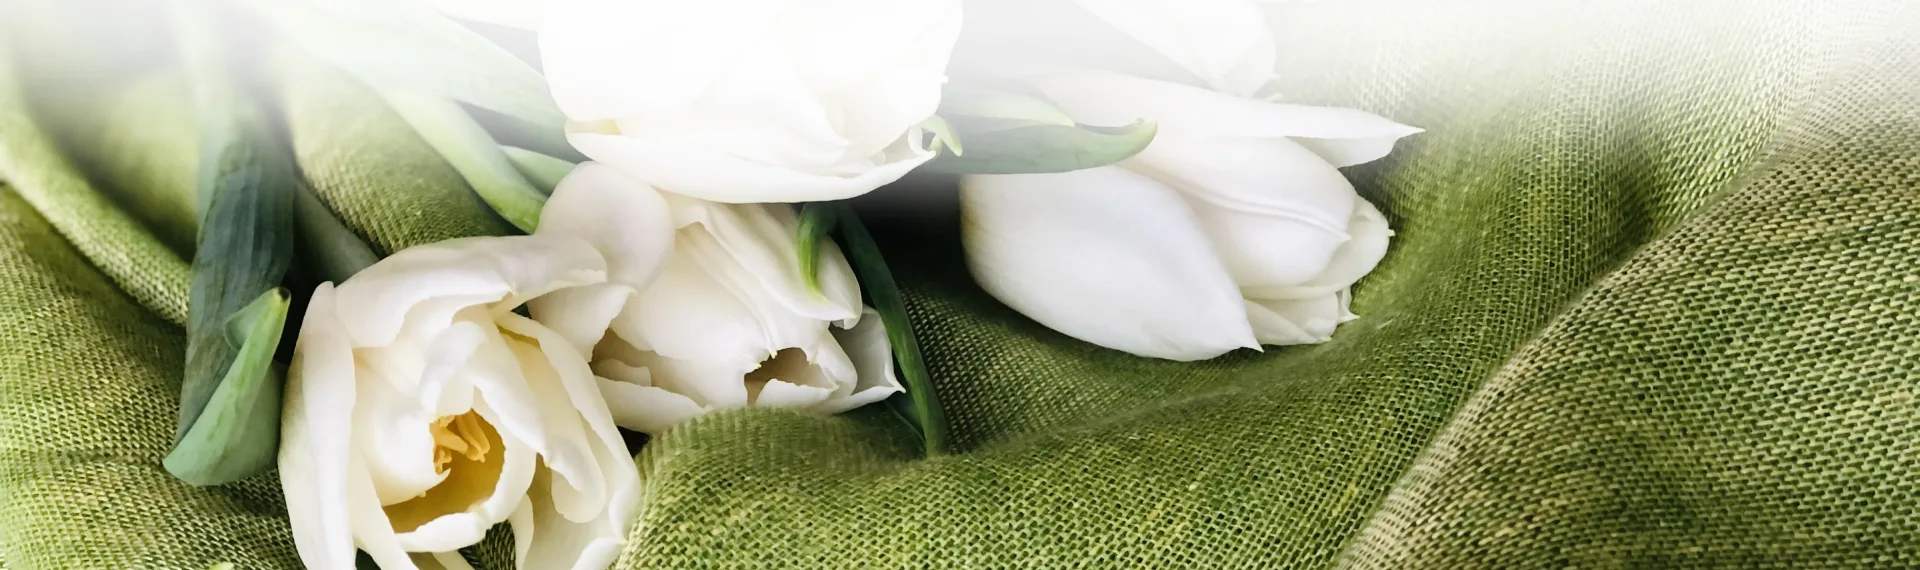 tulipany na tkaninie